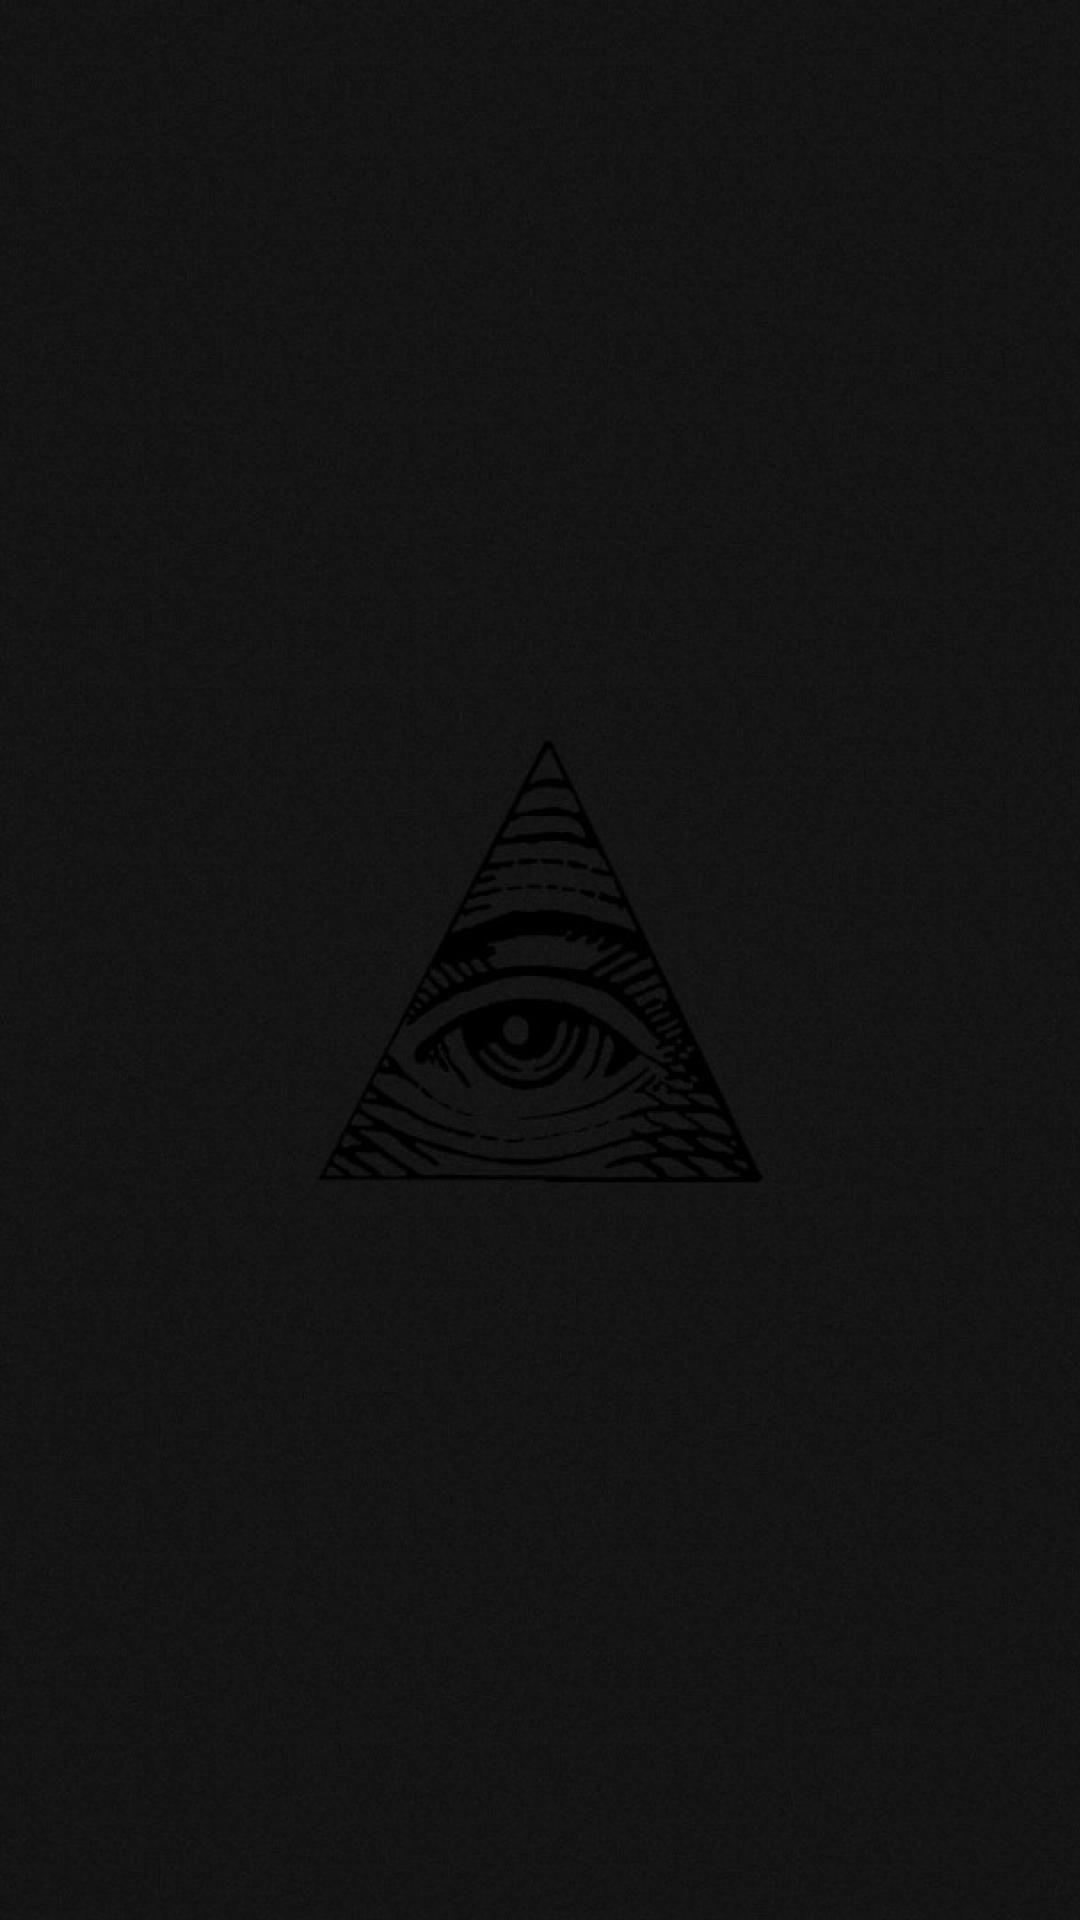 Illuminati Eye Triangle Wallpaper Free Illuminati Eye Triangle Background